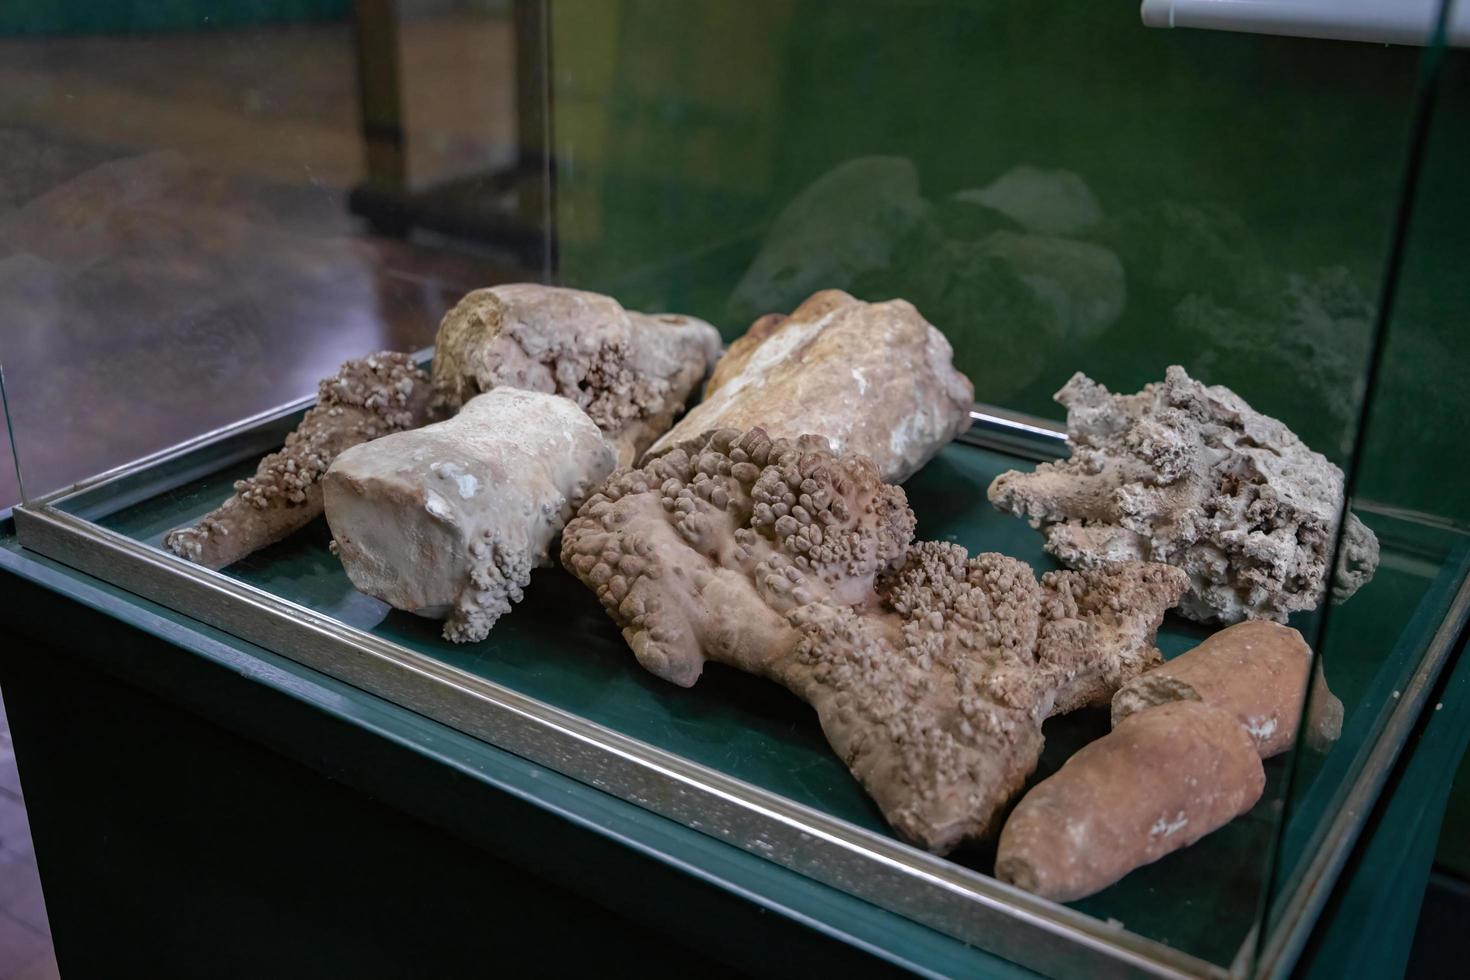 goiania, goias, brésil, 2019 - rocher avec animal fossilisé photo